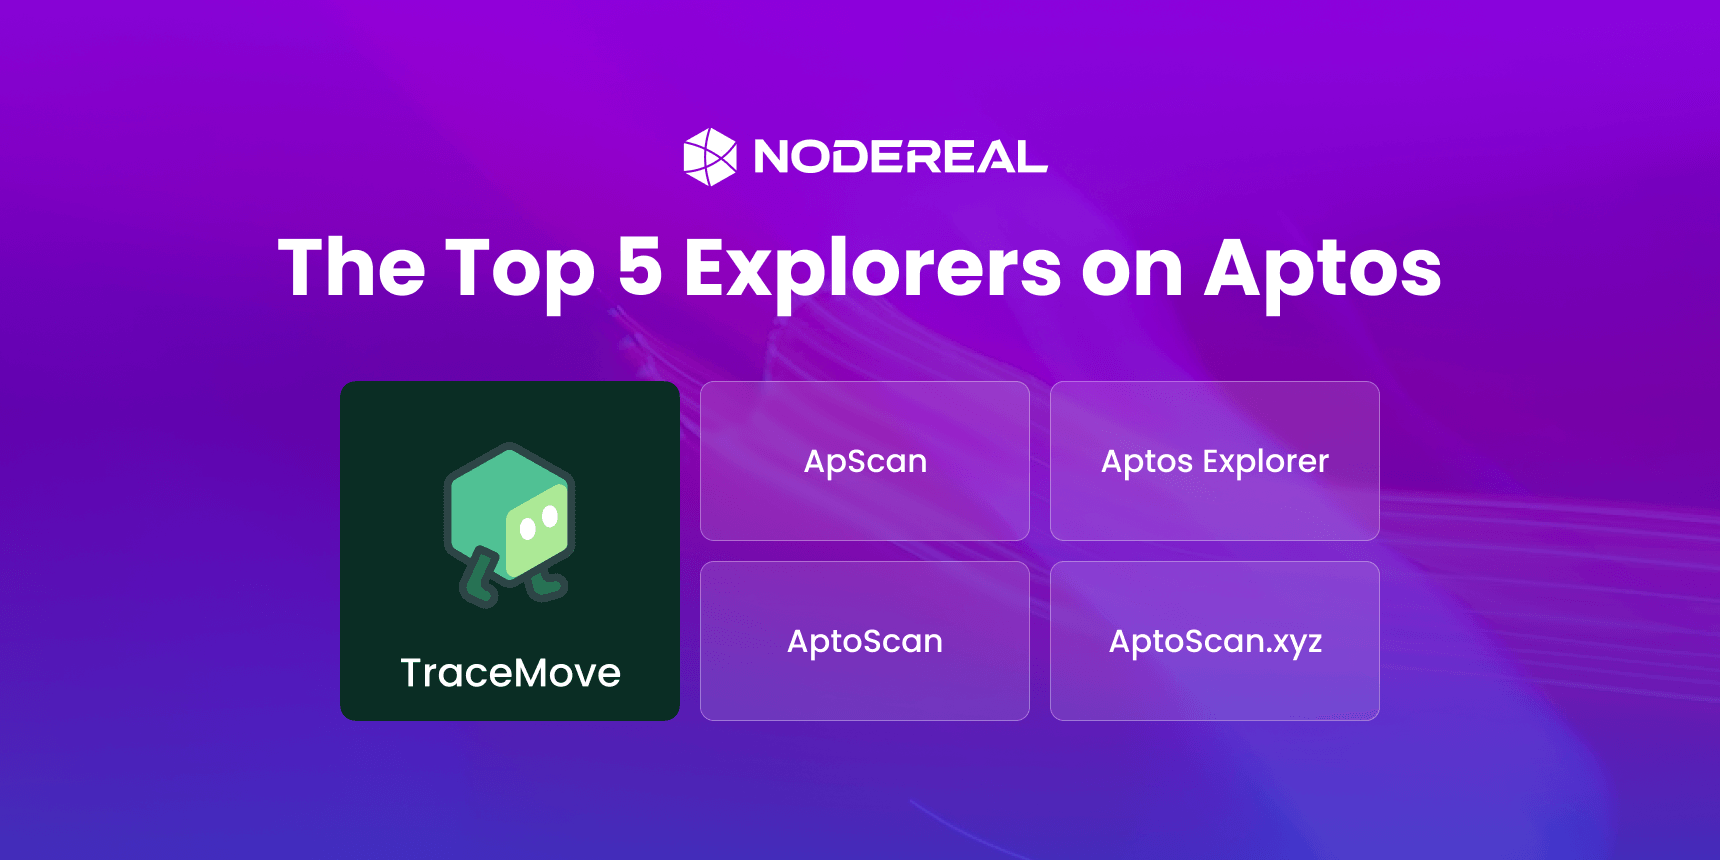 The Top 5 Explorers on Aptos